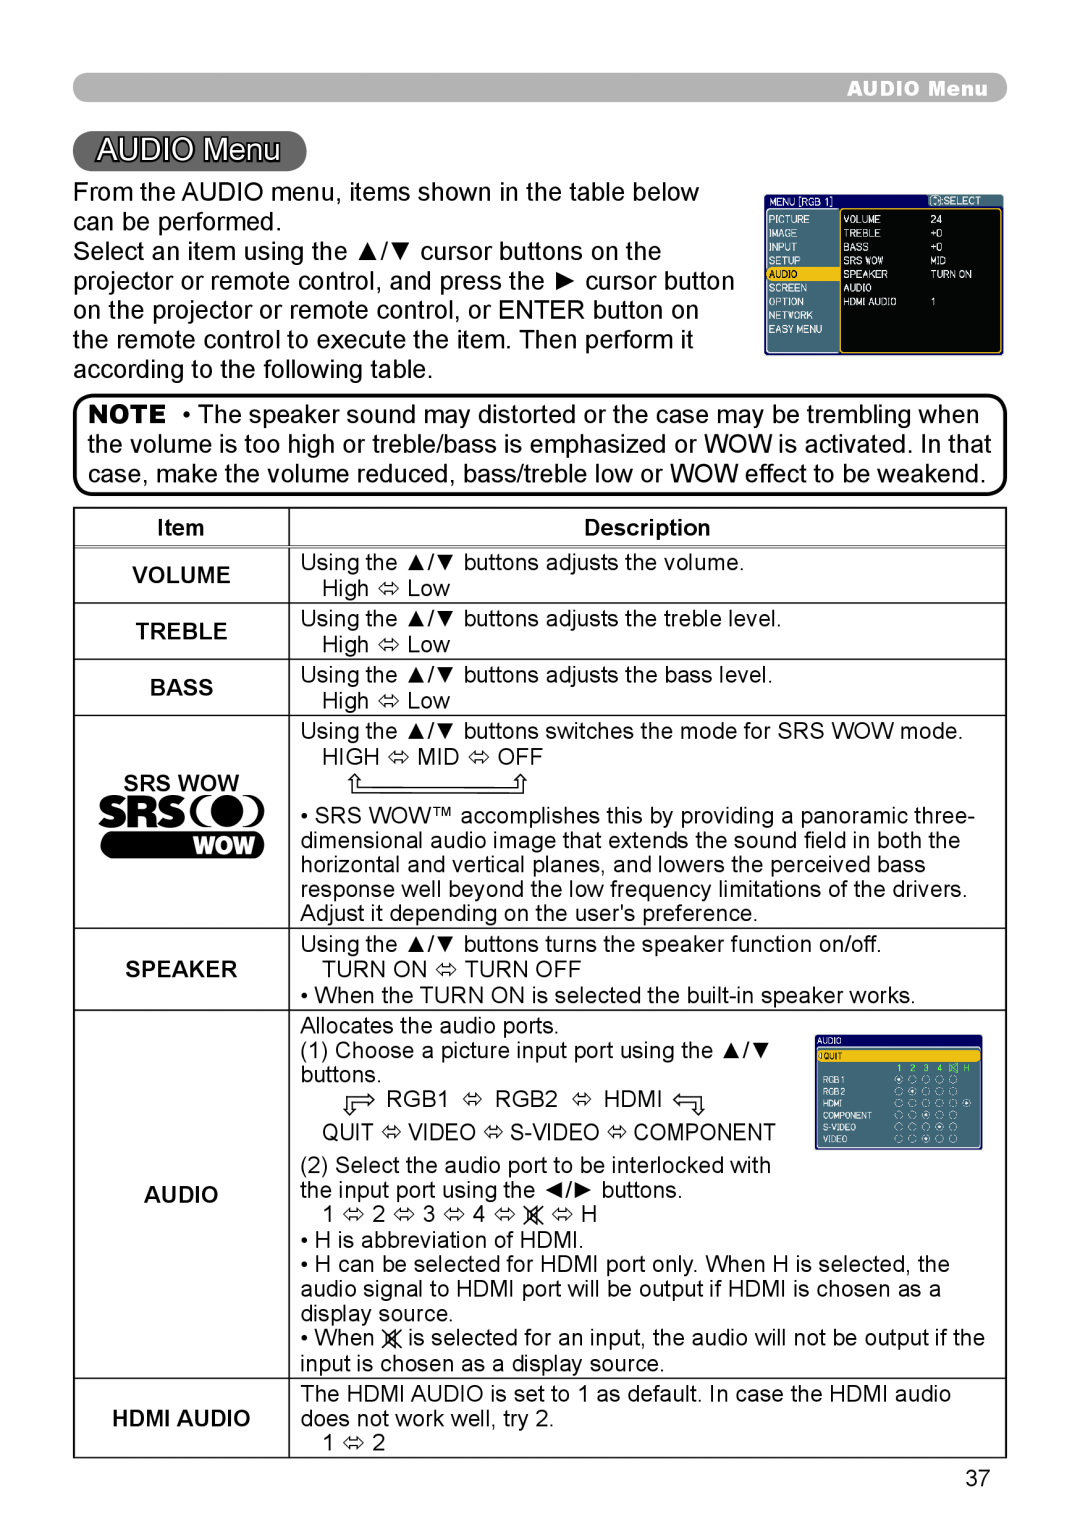 Planar PR9020 user manual AUDIO Menu, 1 ó 2 ó 3 ó 4 ó ó H 